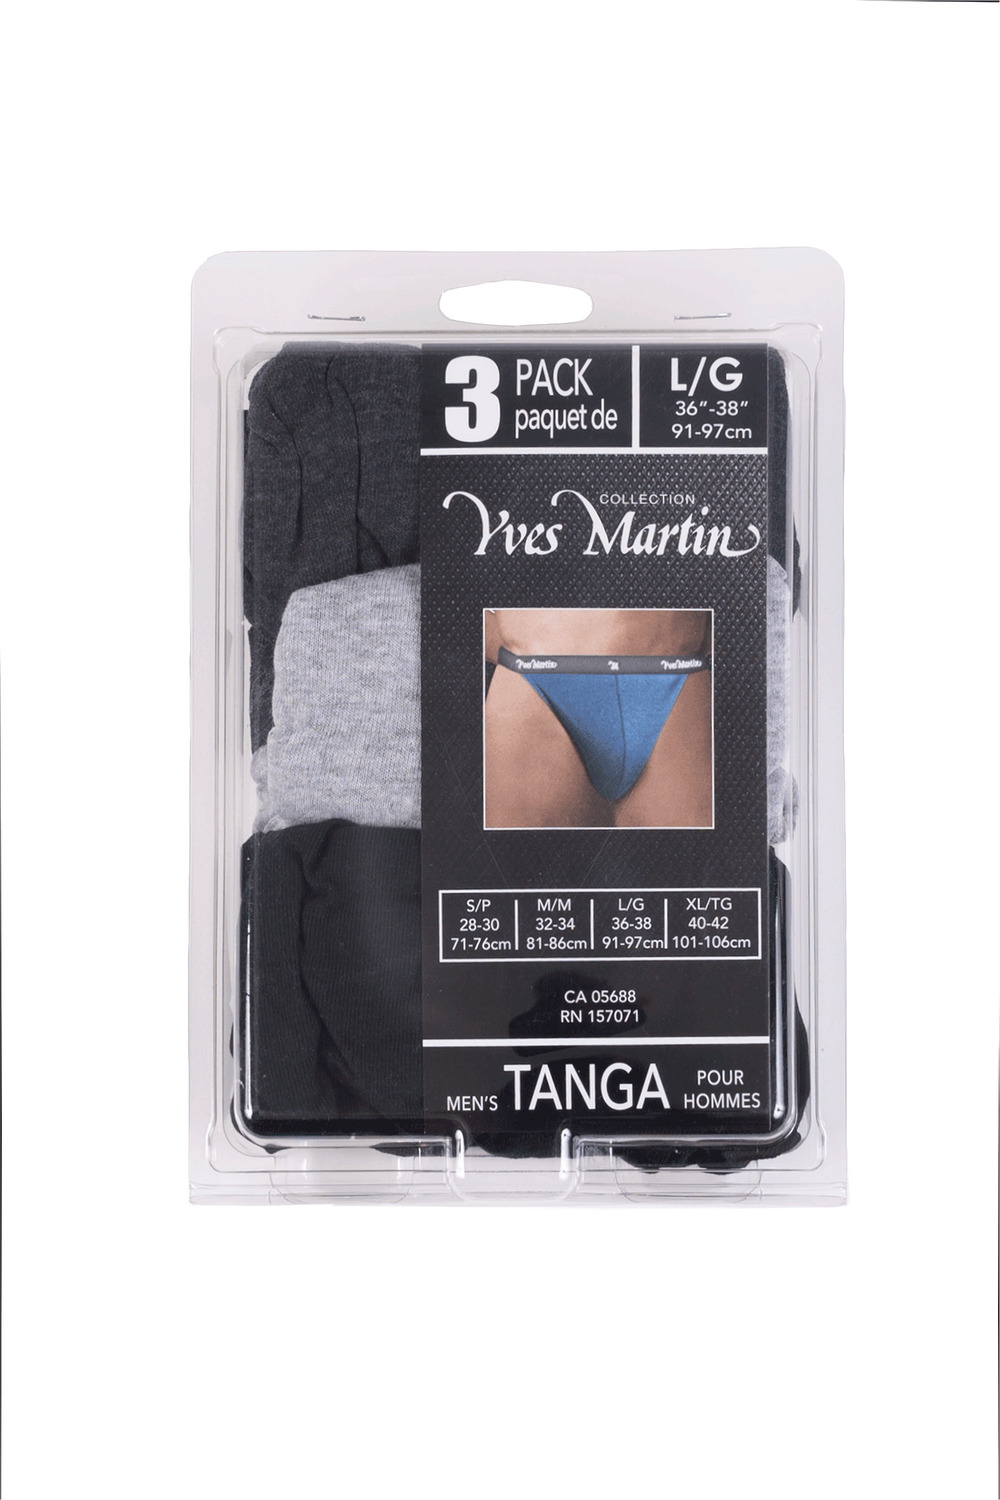 Yves Martin - Men's solid tanga briefs, pk. of 3, large